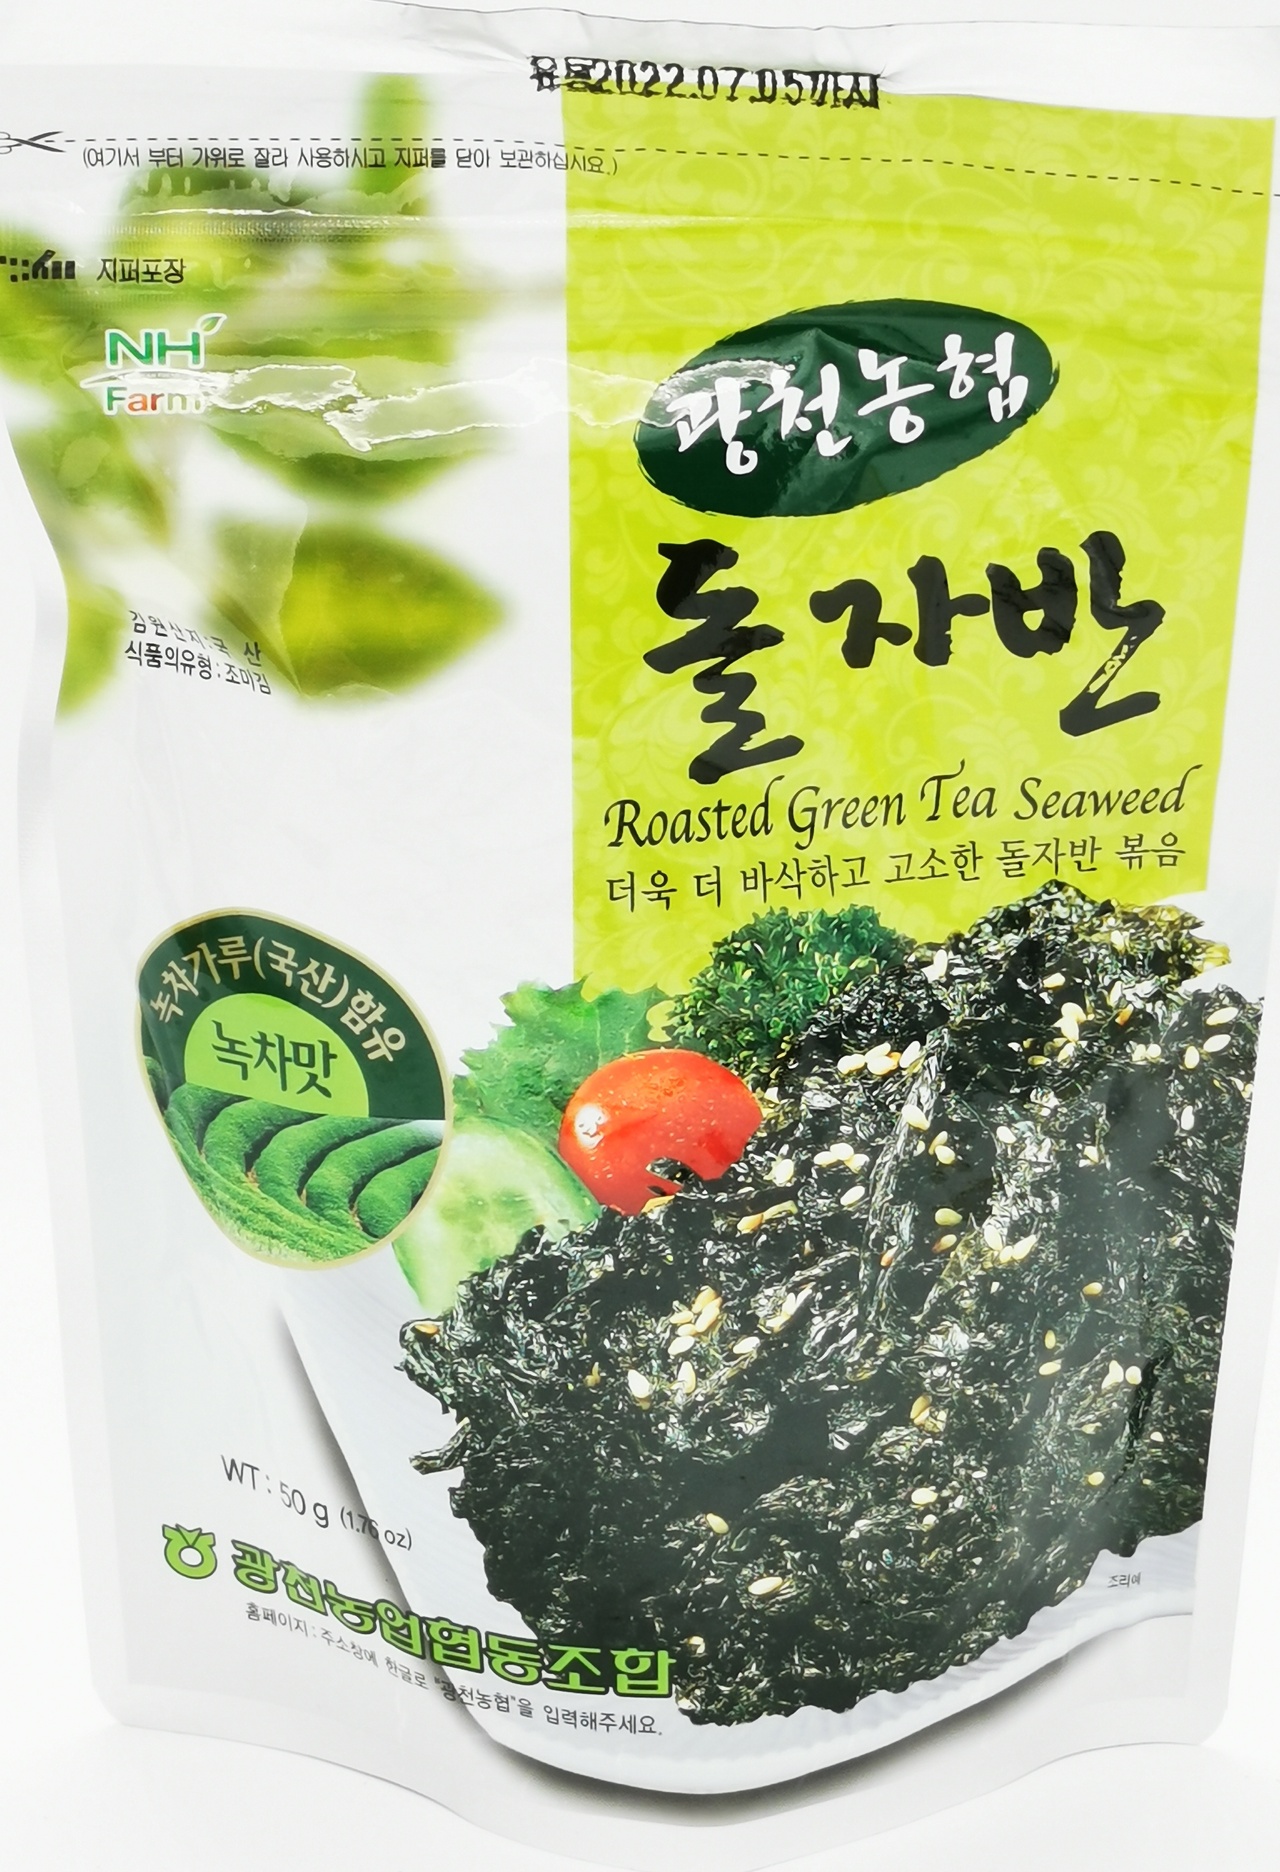 NH Farm Roasted Green Tea Seaweed 50g